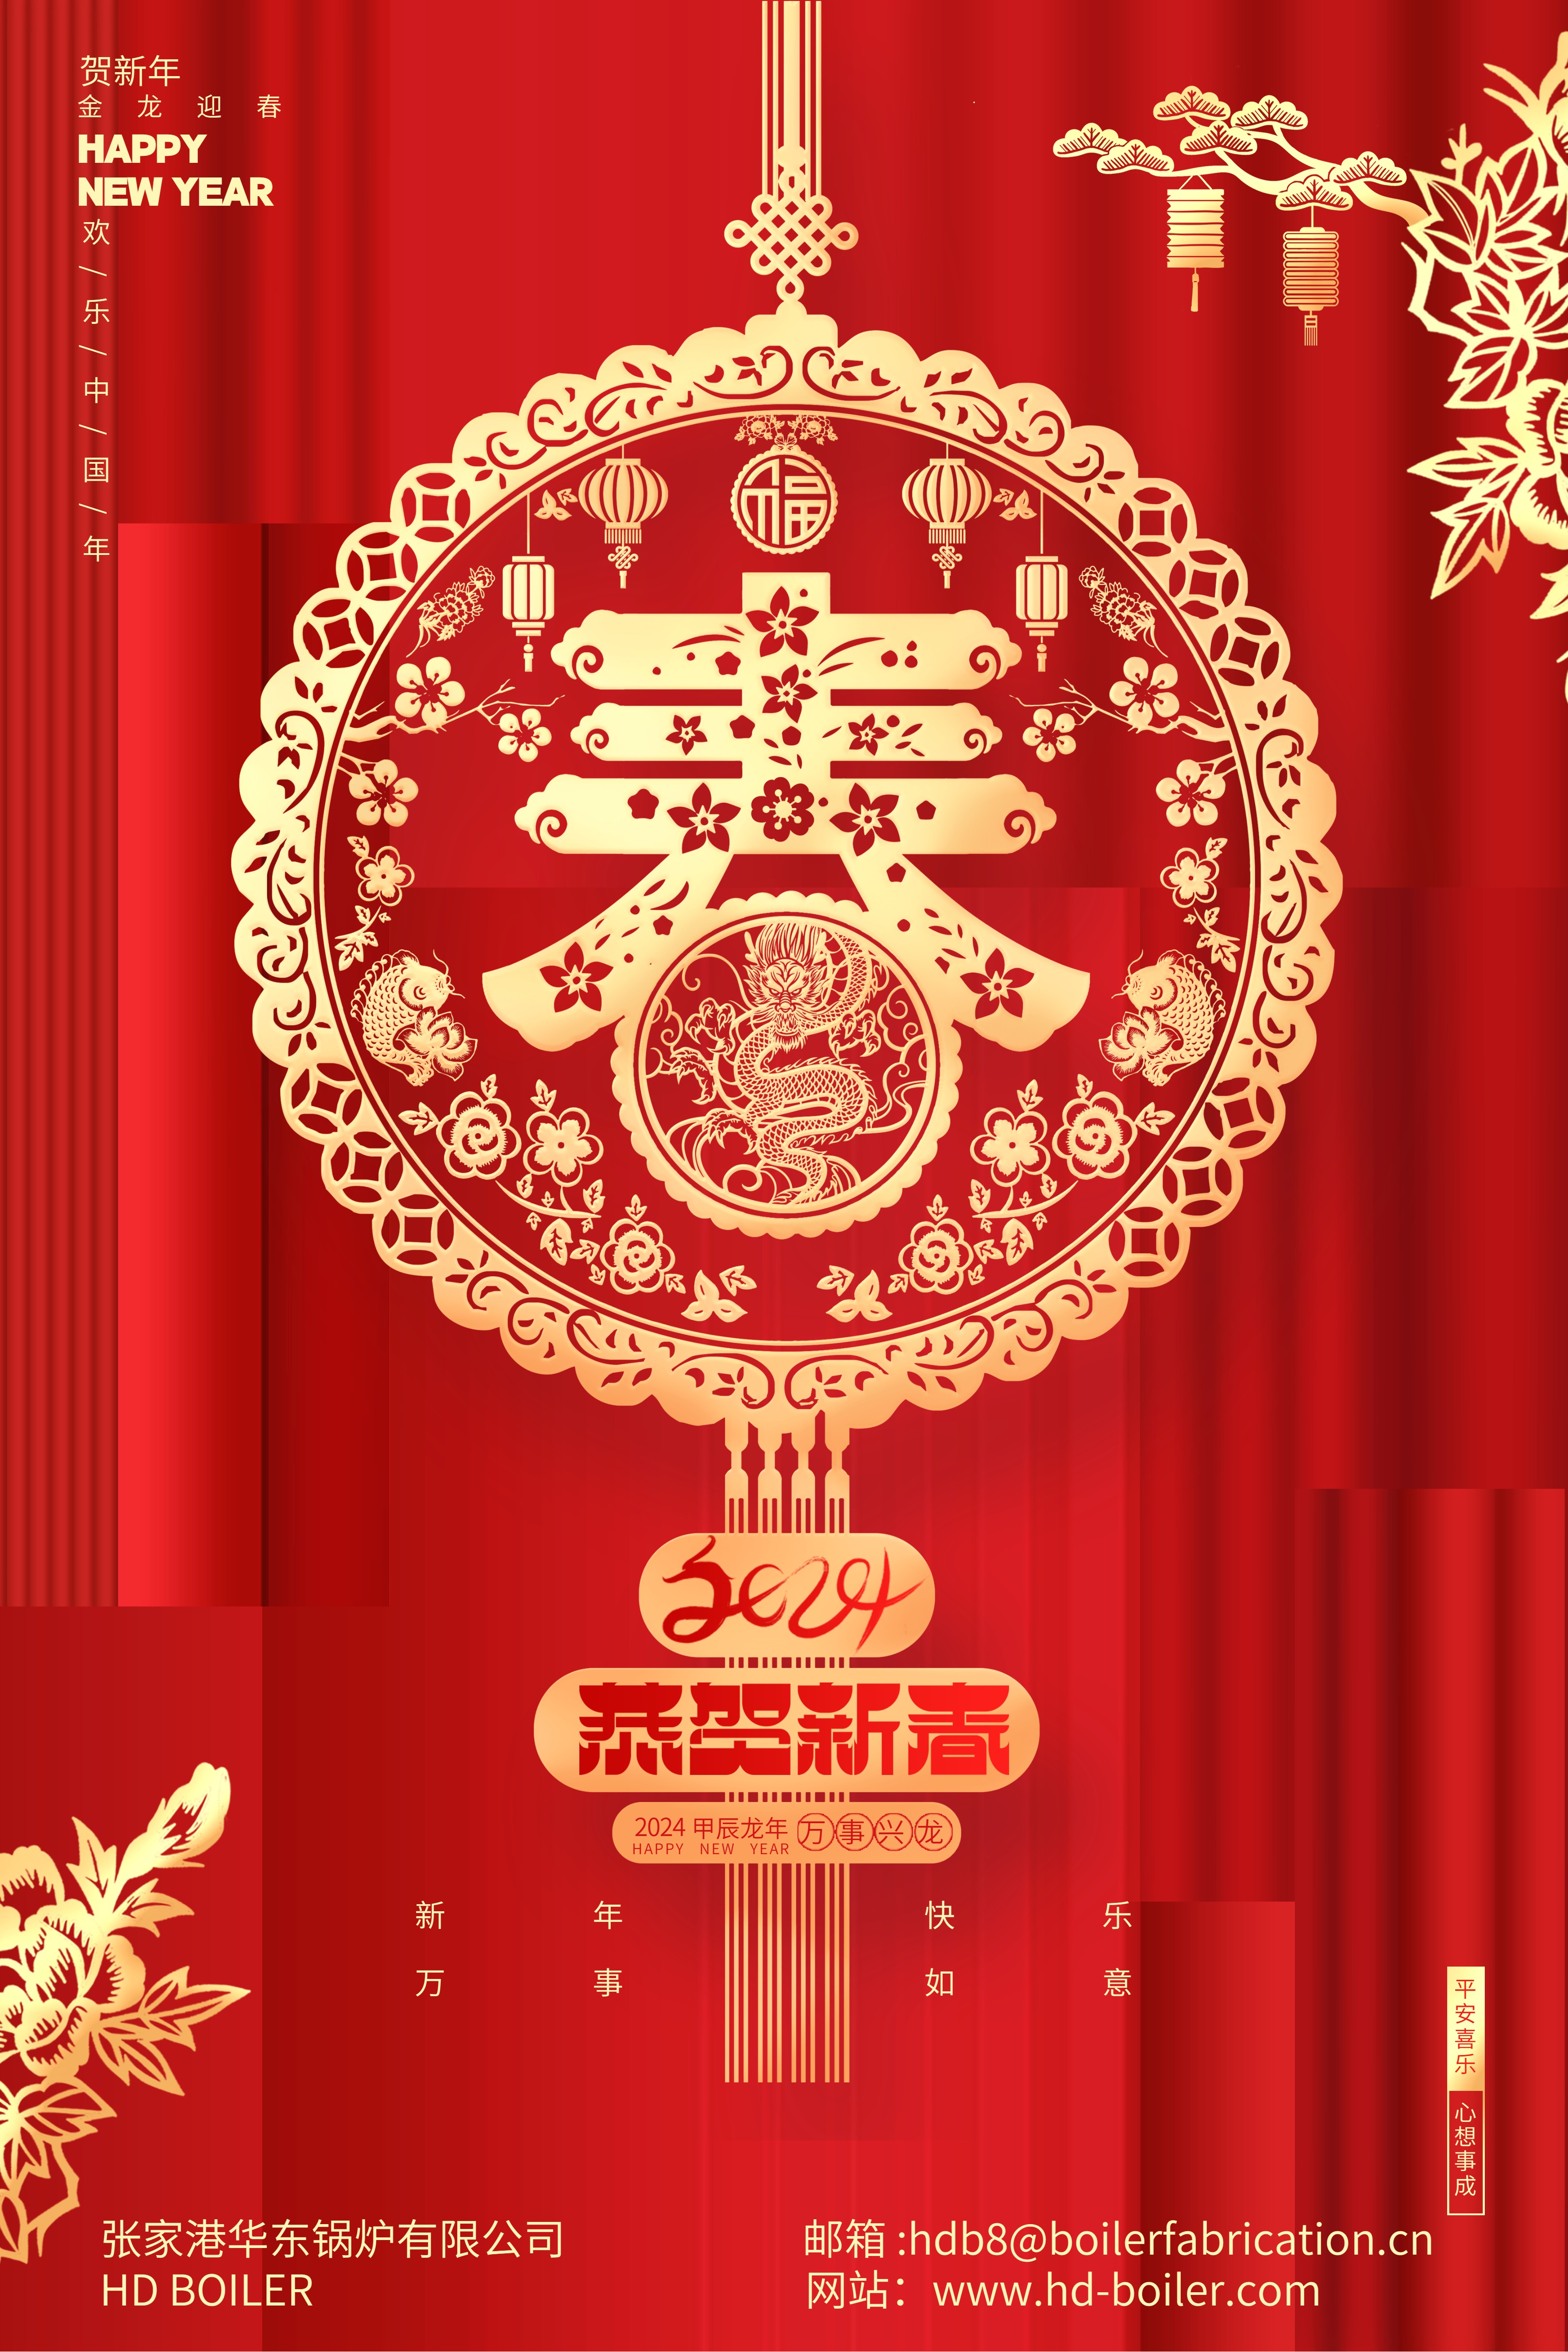 HAPPY CHINESE NEW YEAR!